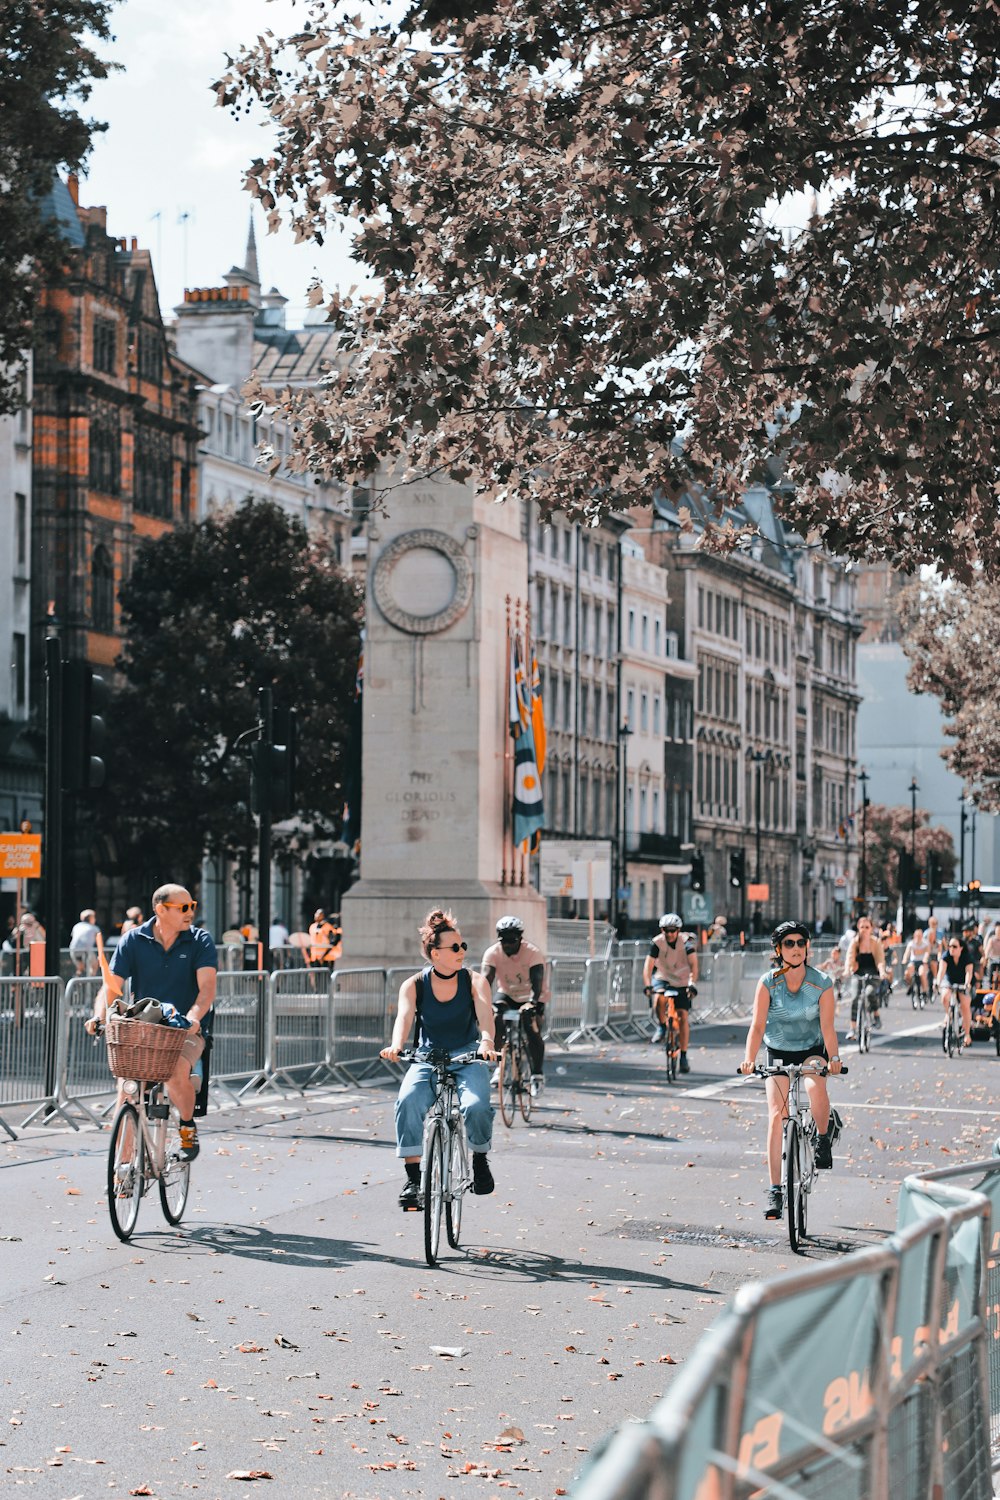 people riding bicycle on street during daytime